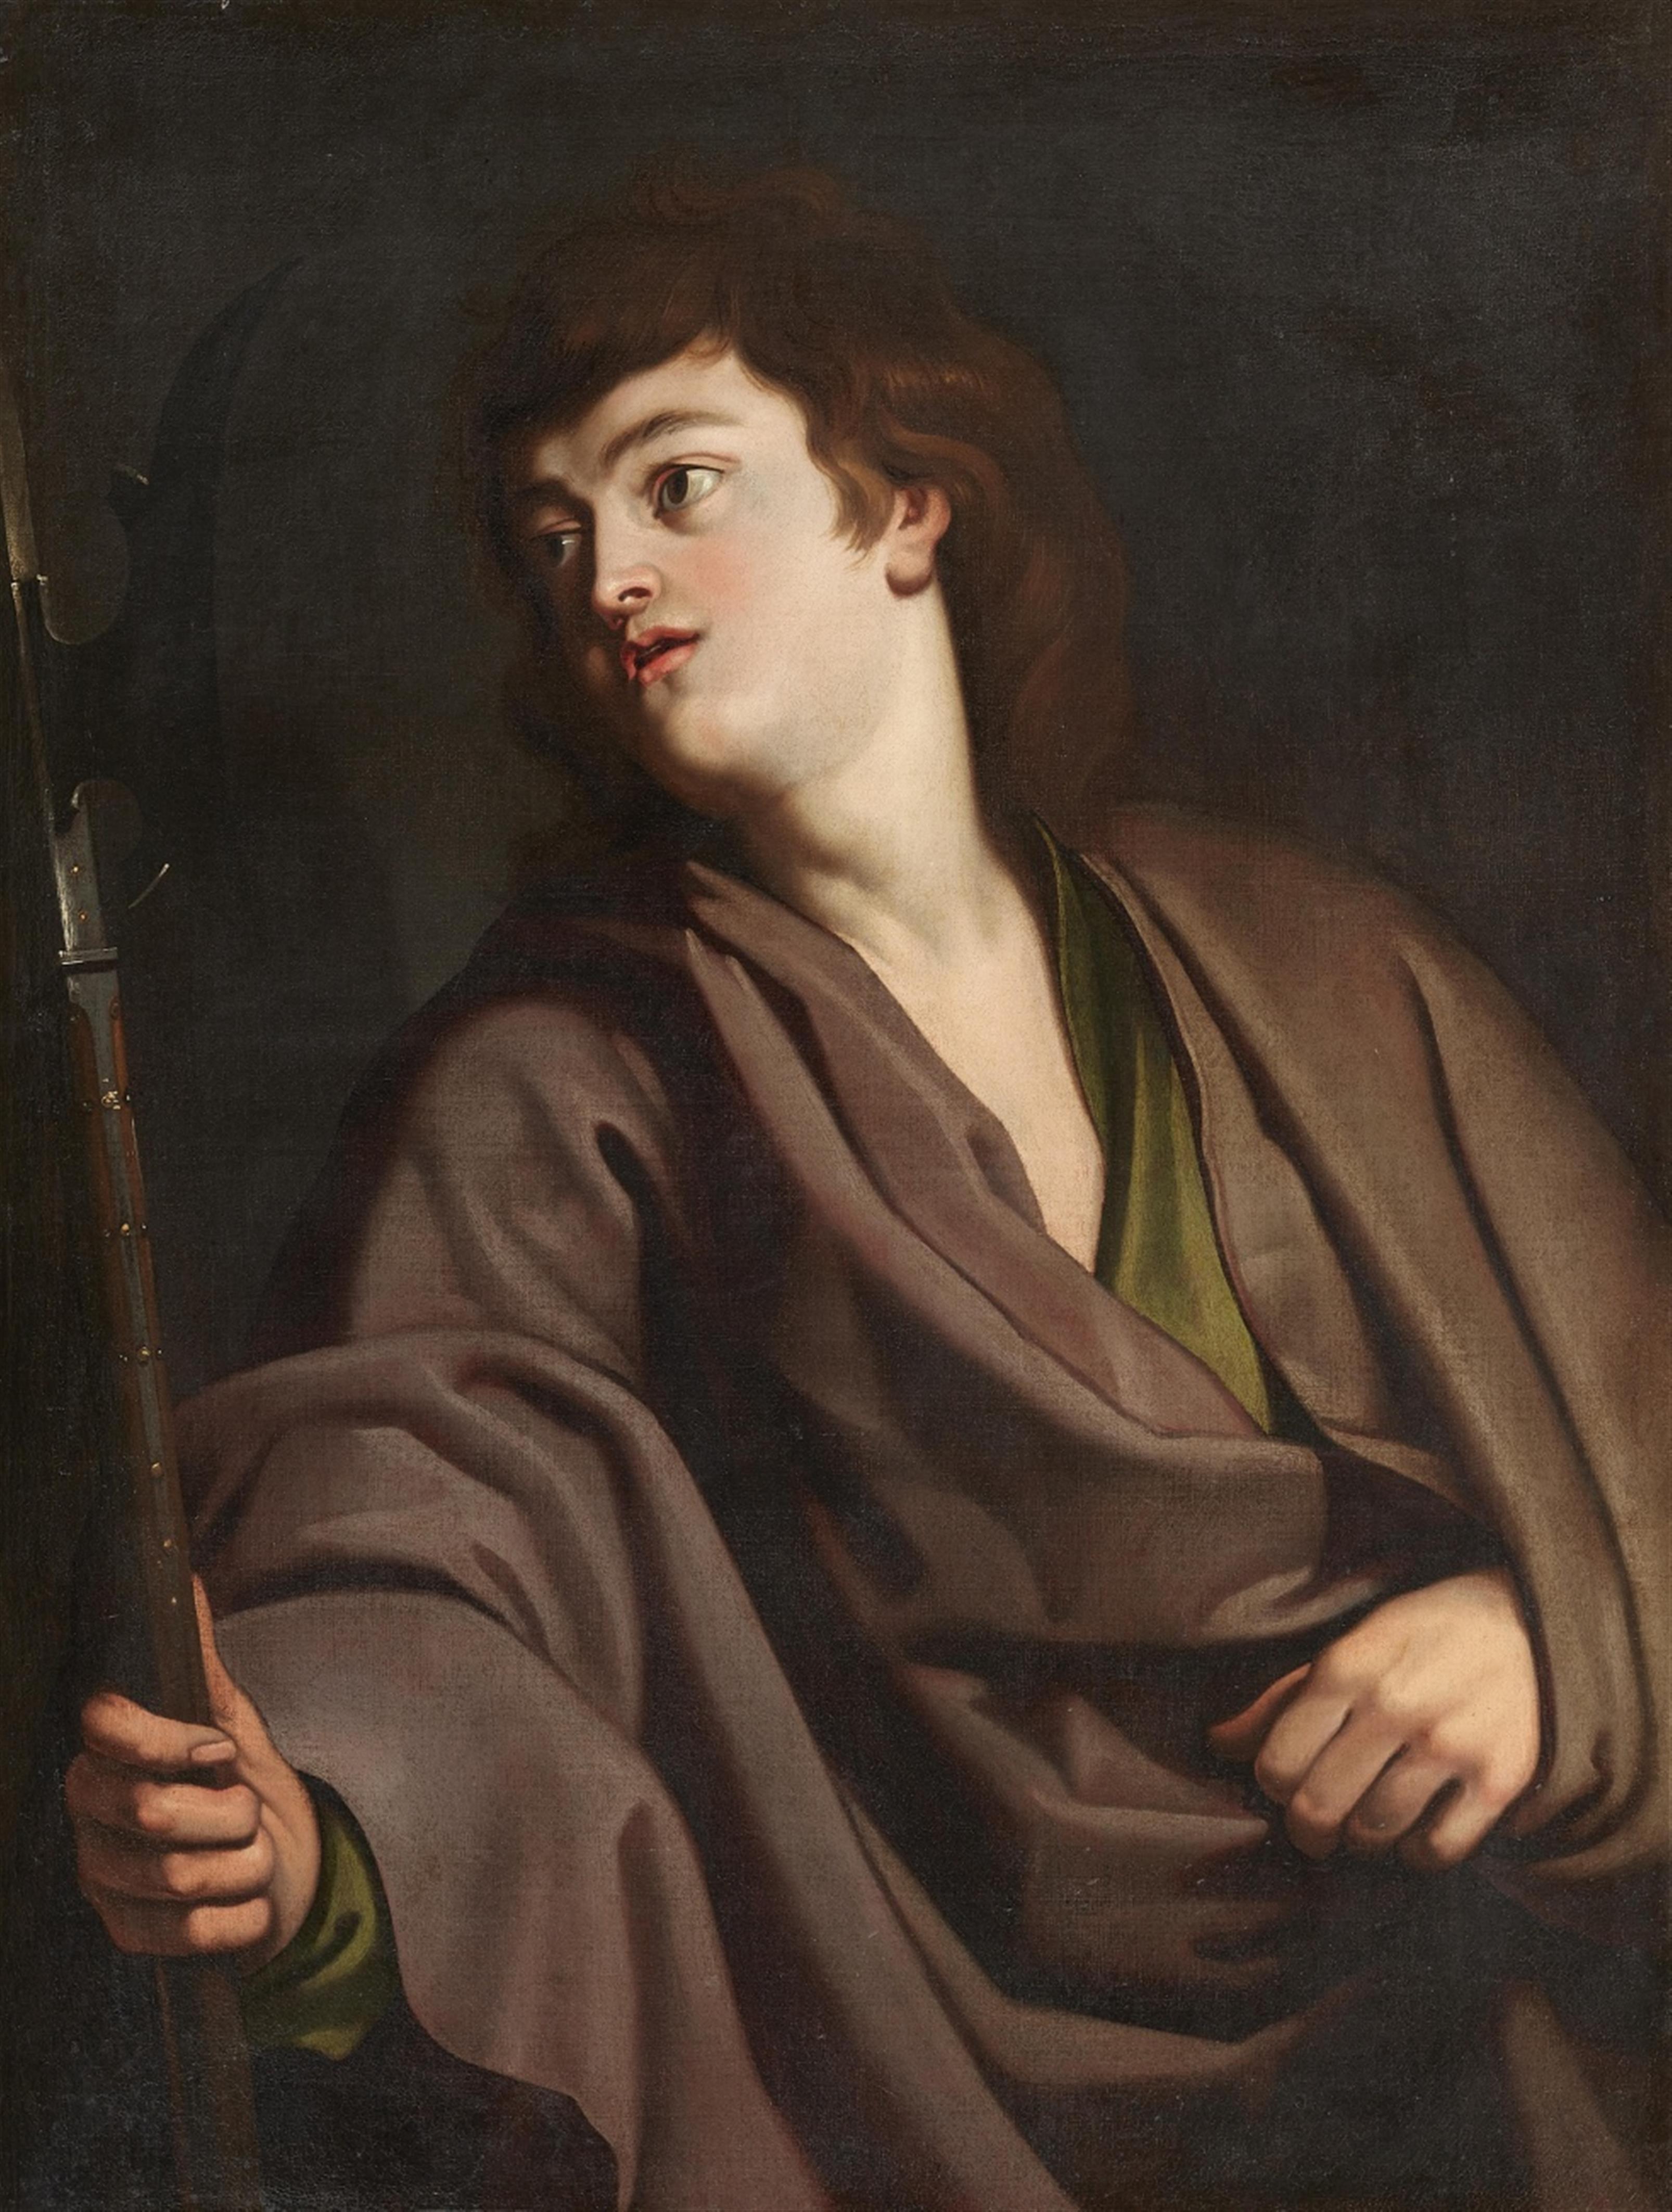 Jacob Jordaens, attributed to - Saint Matthew the Evangelist - image-1